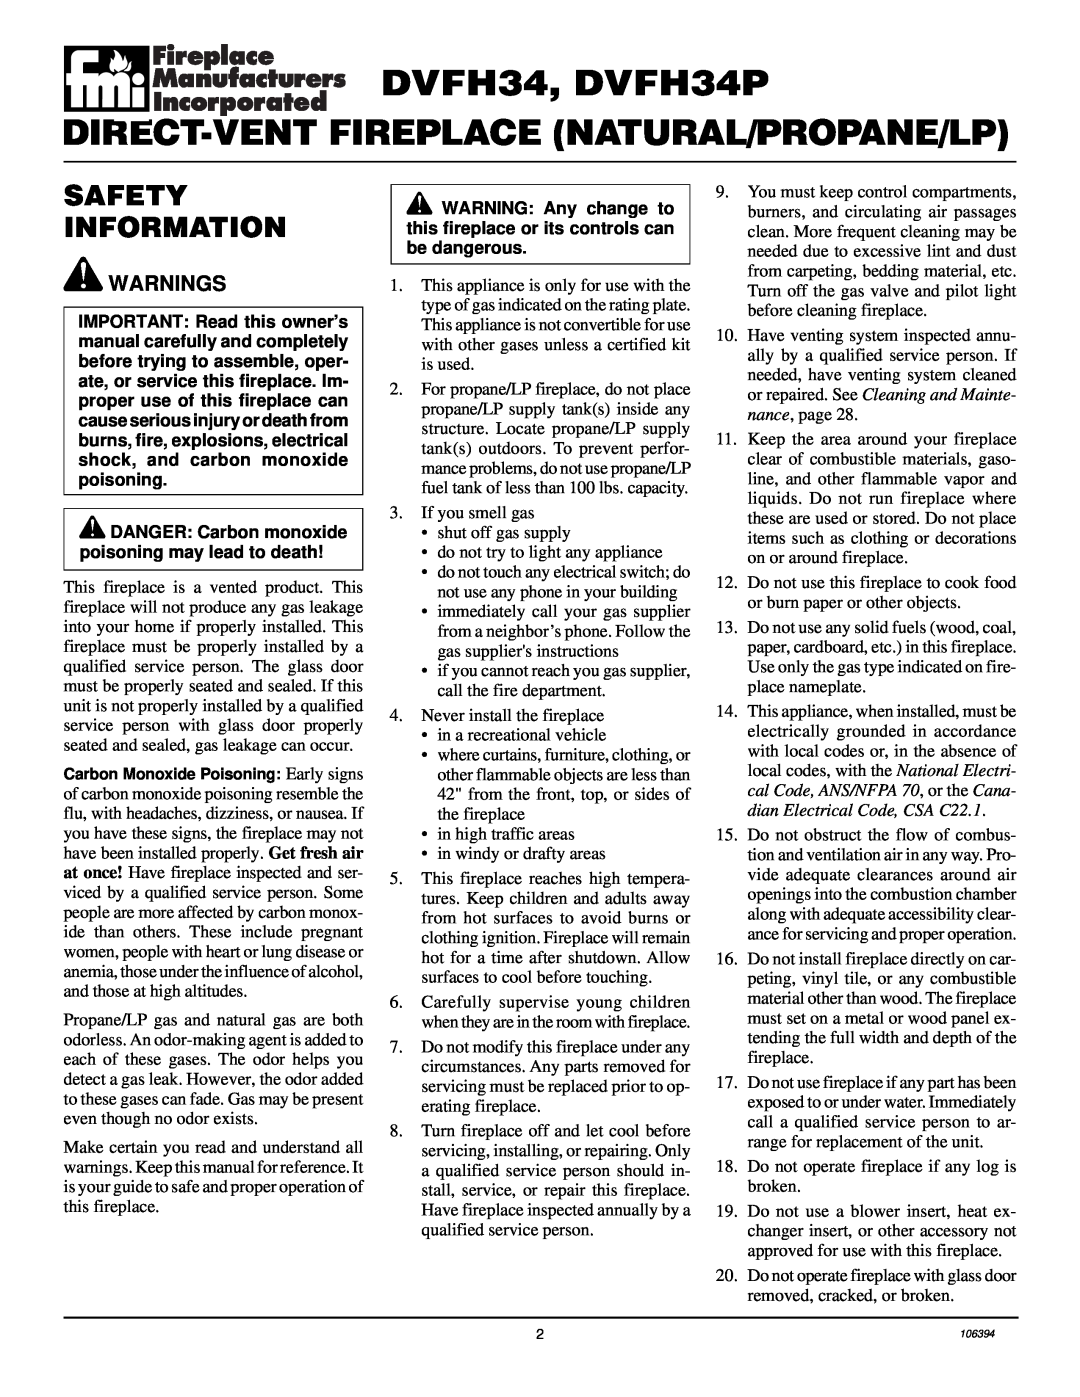 Desa installation manual DVFH34, DVFH34P, Direct-Ventfireplace Natural/Propane/Lp, Safety Information 